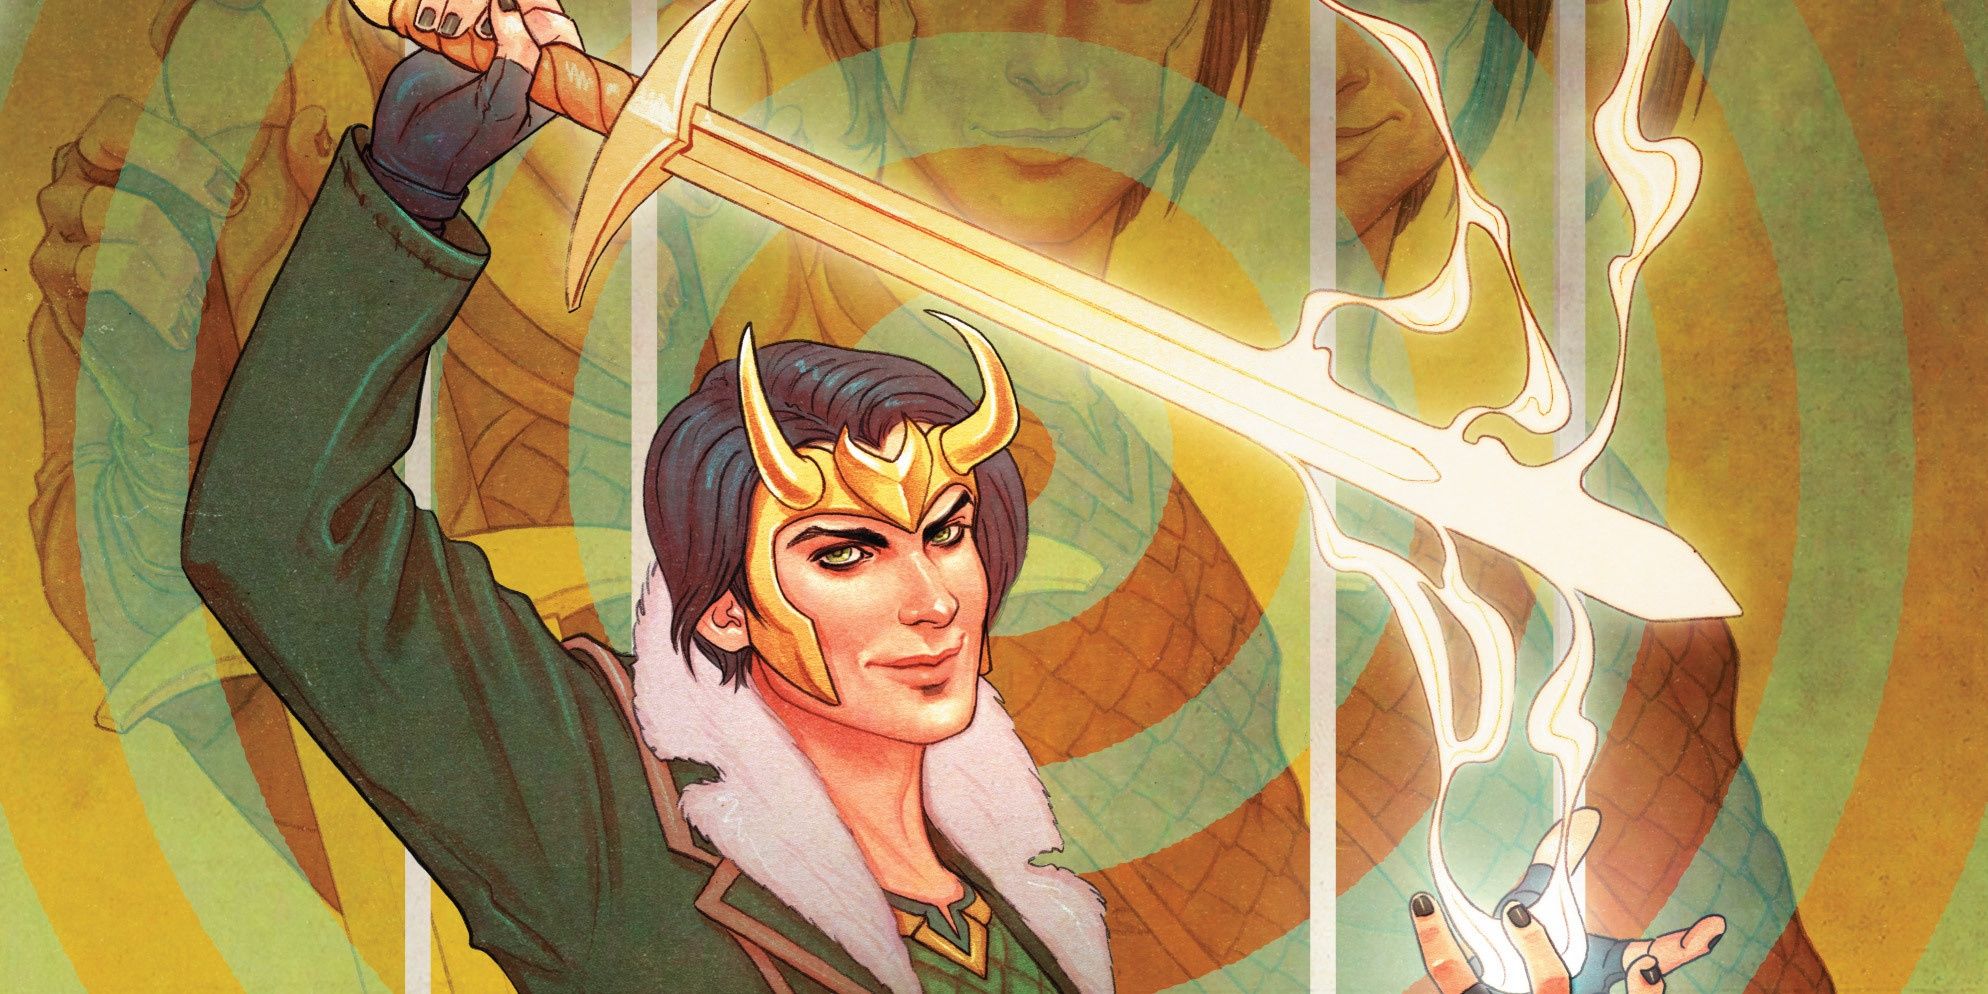 Loki Agent Of Asgard #1 Loki holding a glowing sword in hand